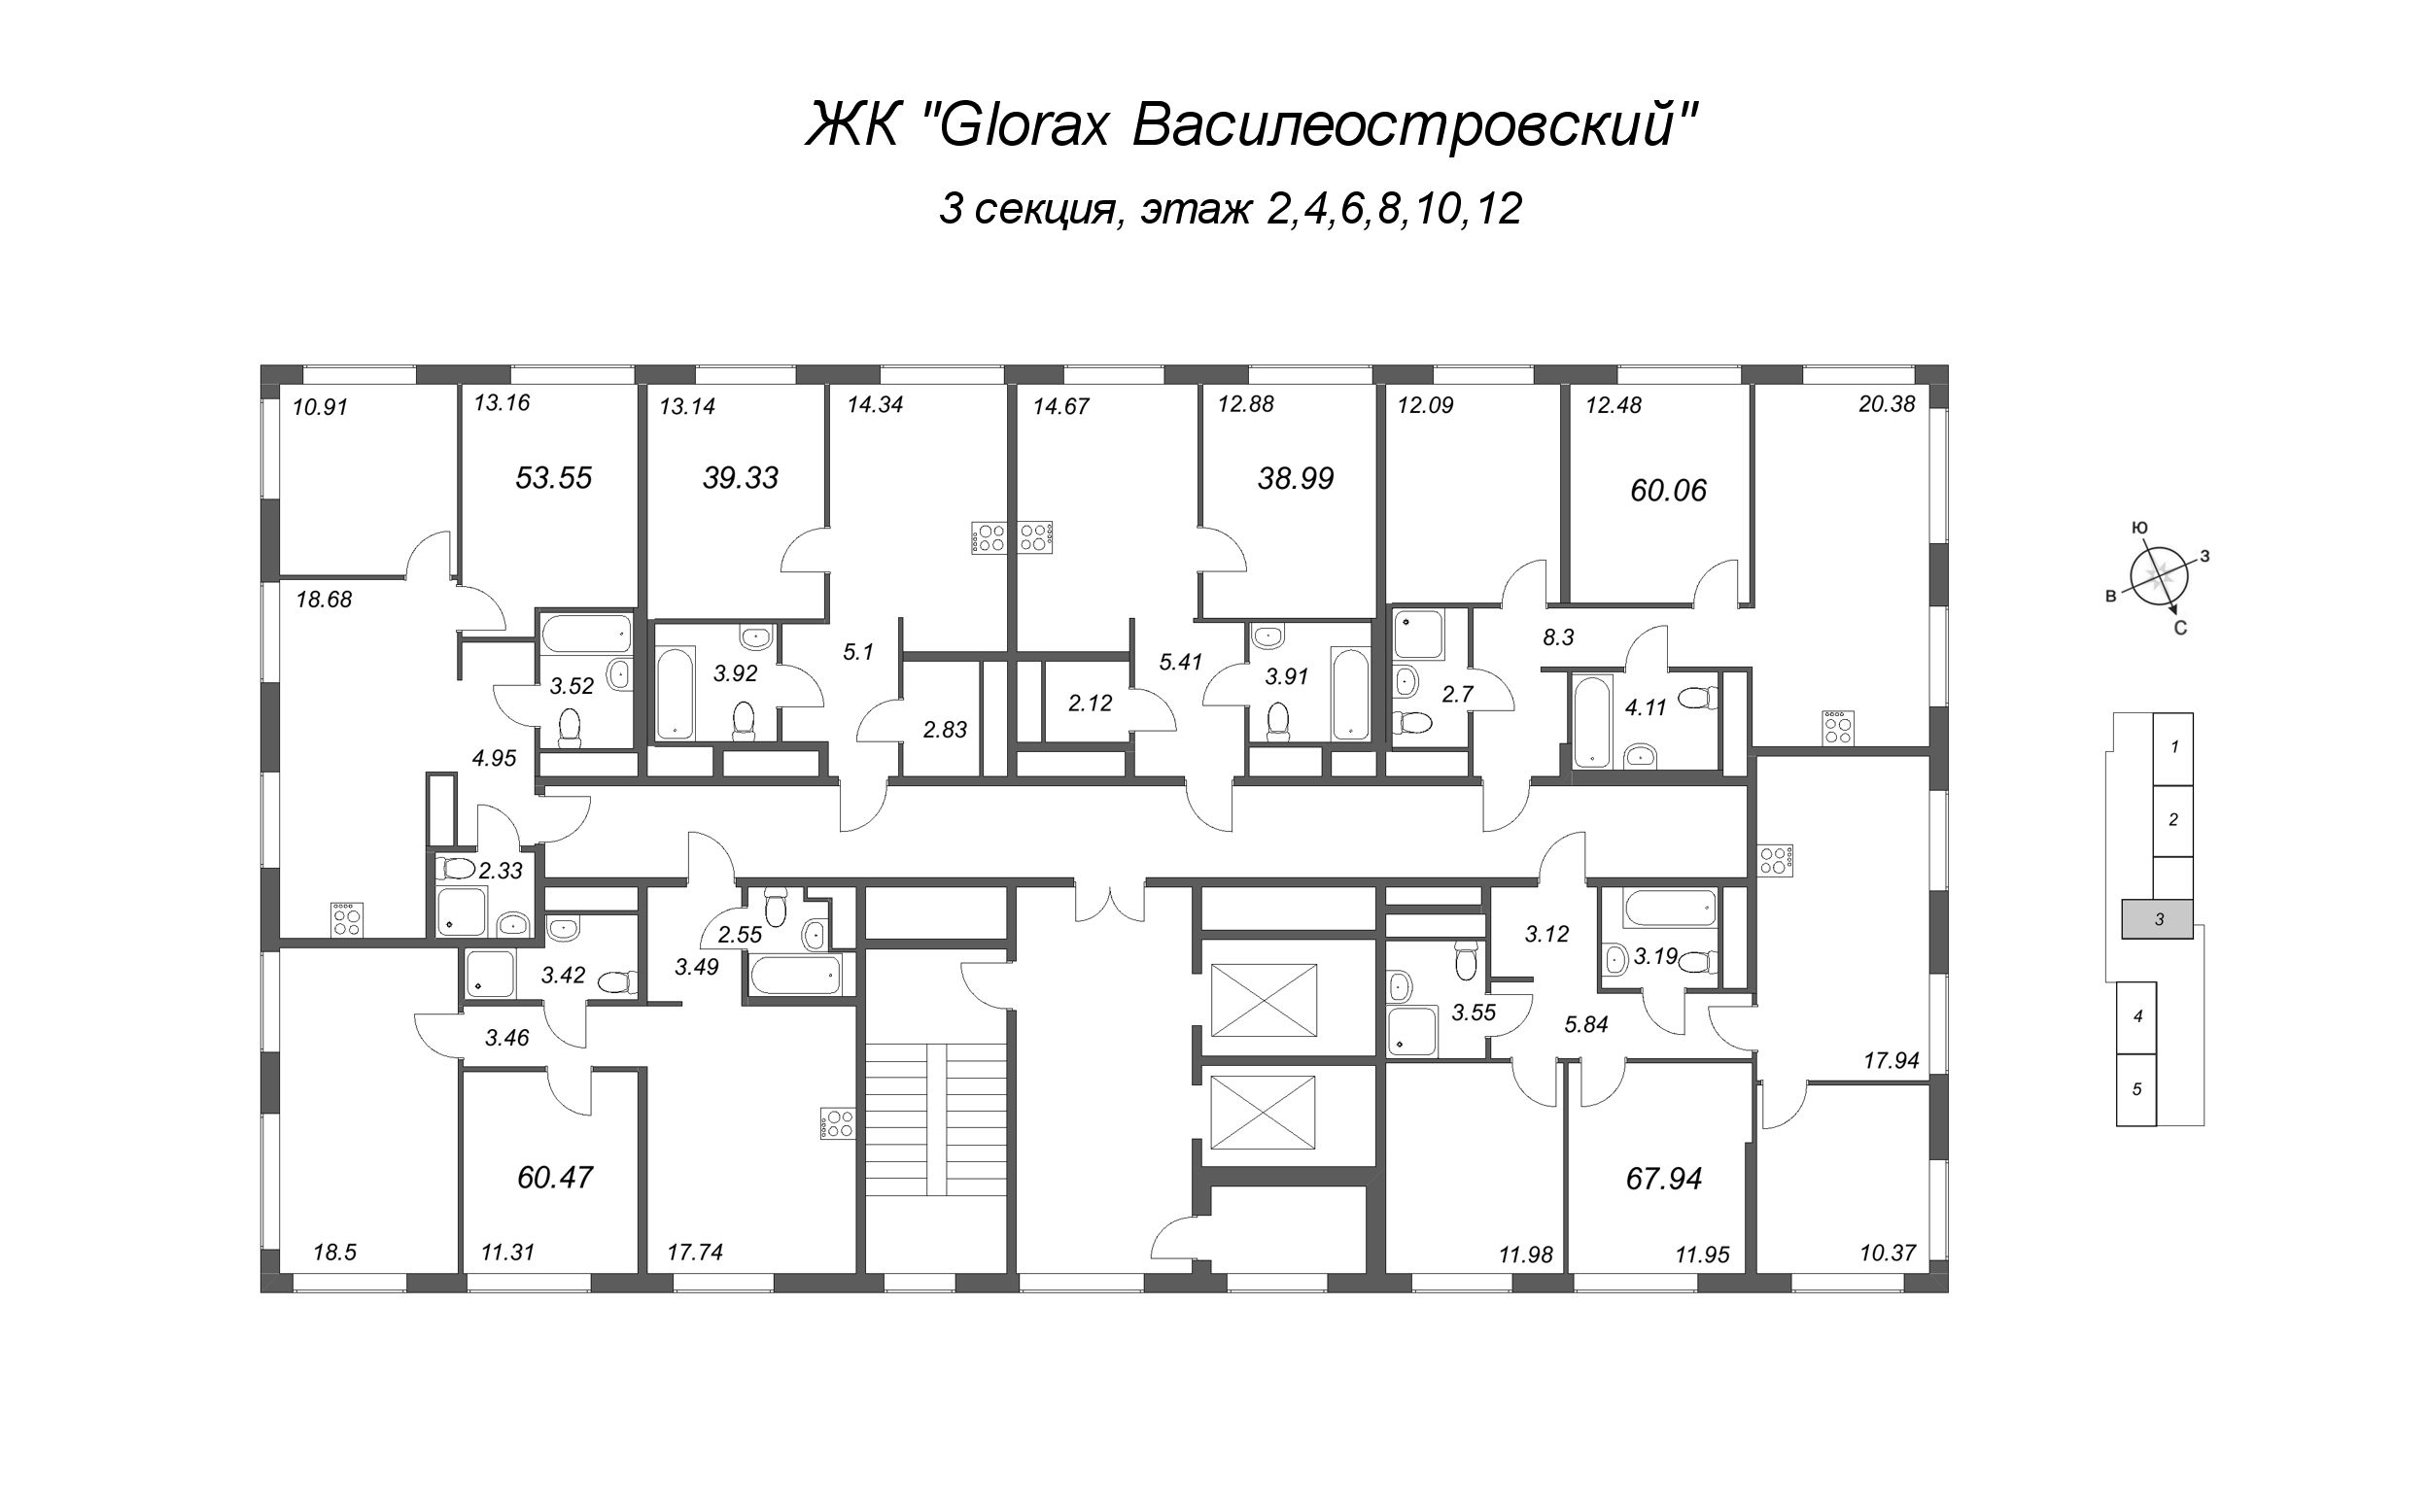 3-комнатная (Евро) квартира, 60.06 м² - планировка этажа